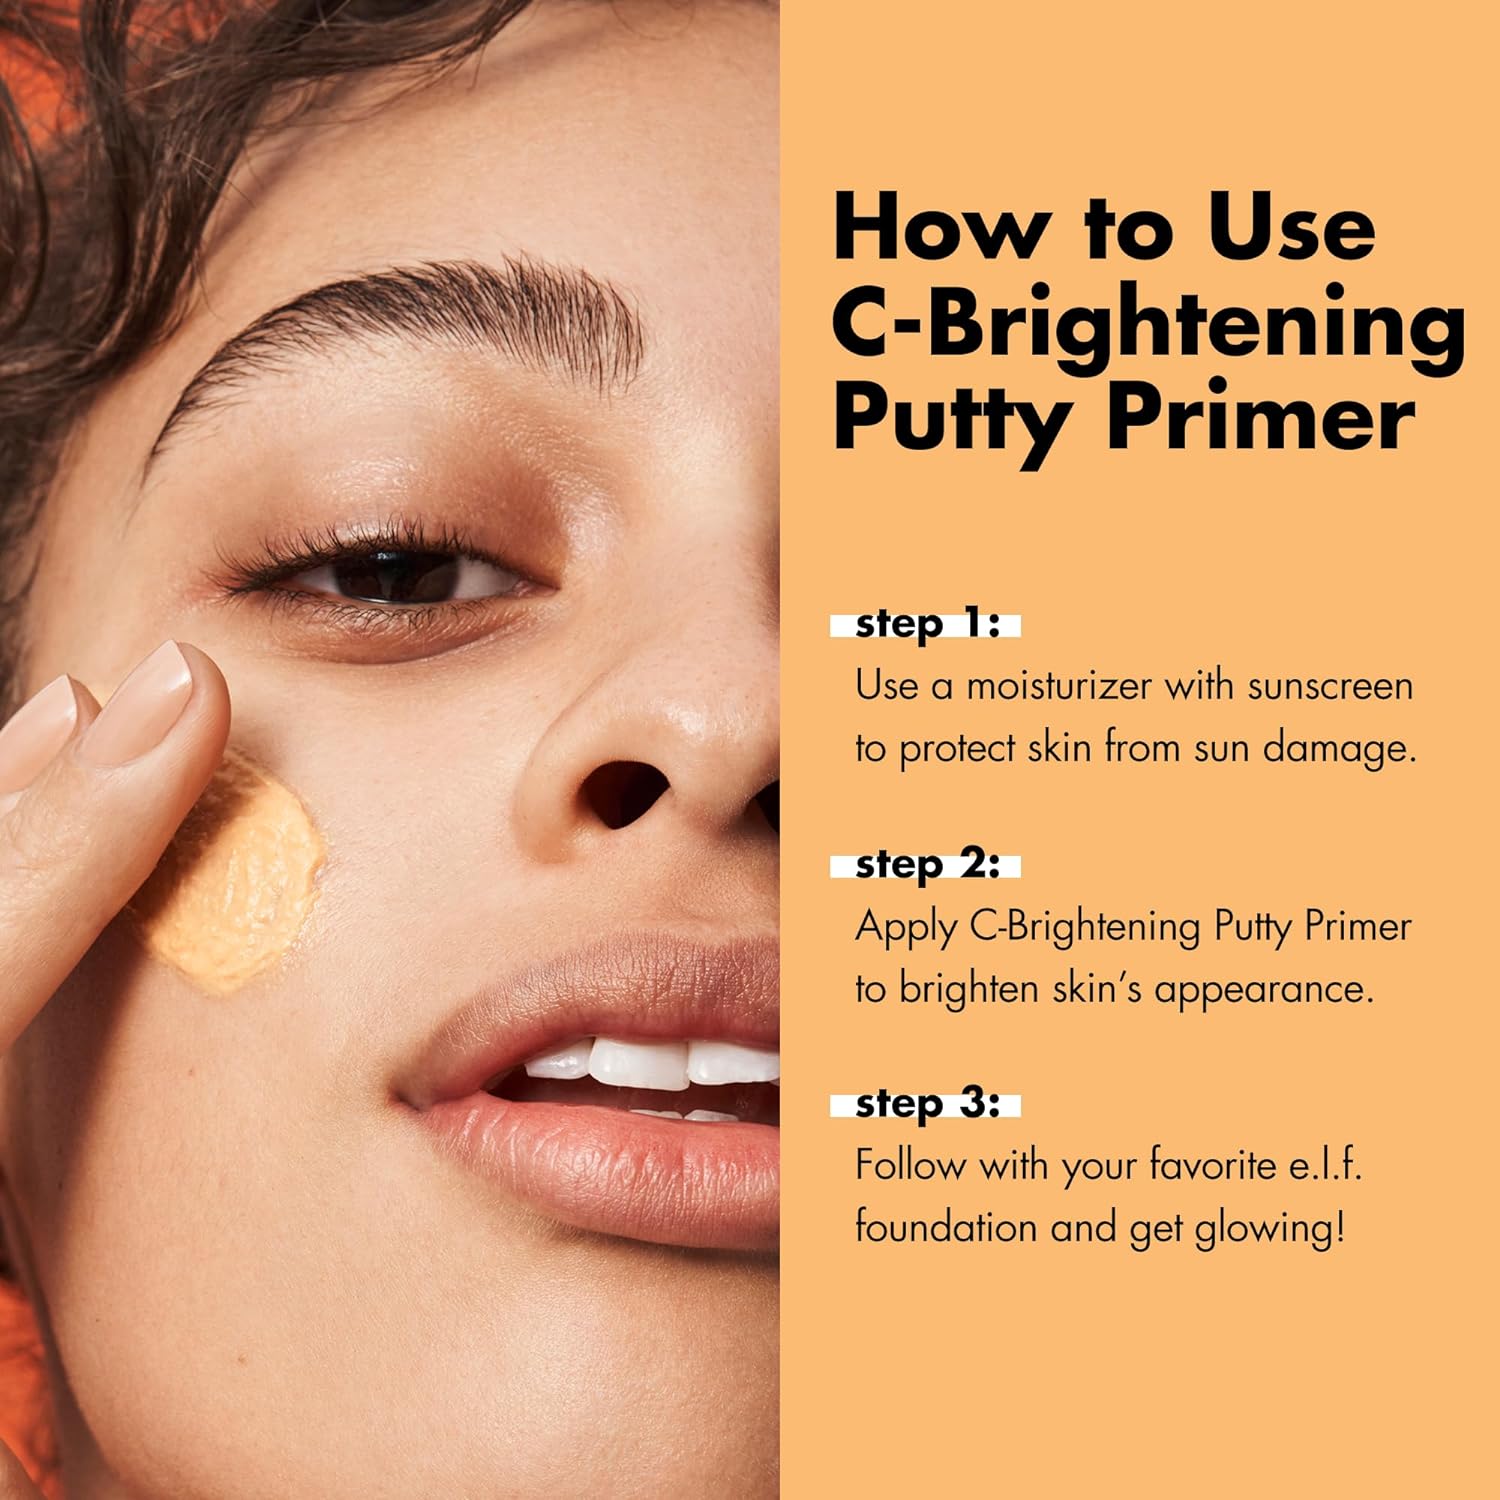 e.l.f C-Brightening Putty Primer, Makeup Primer For Brighten